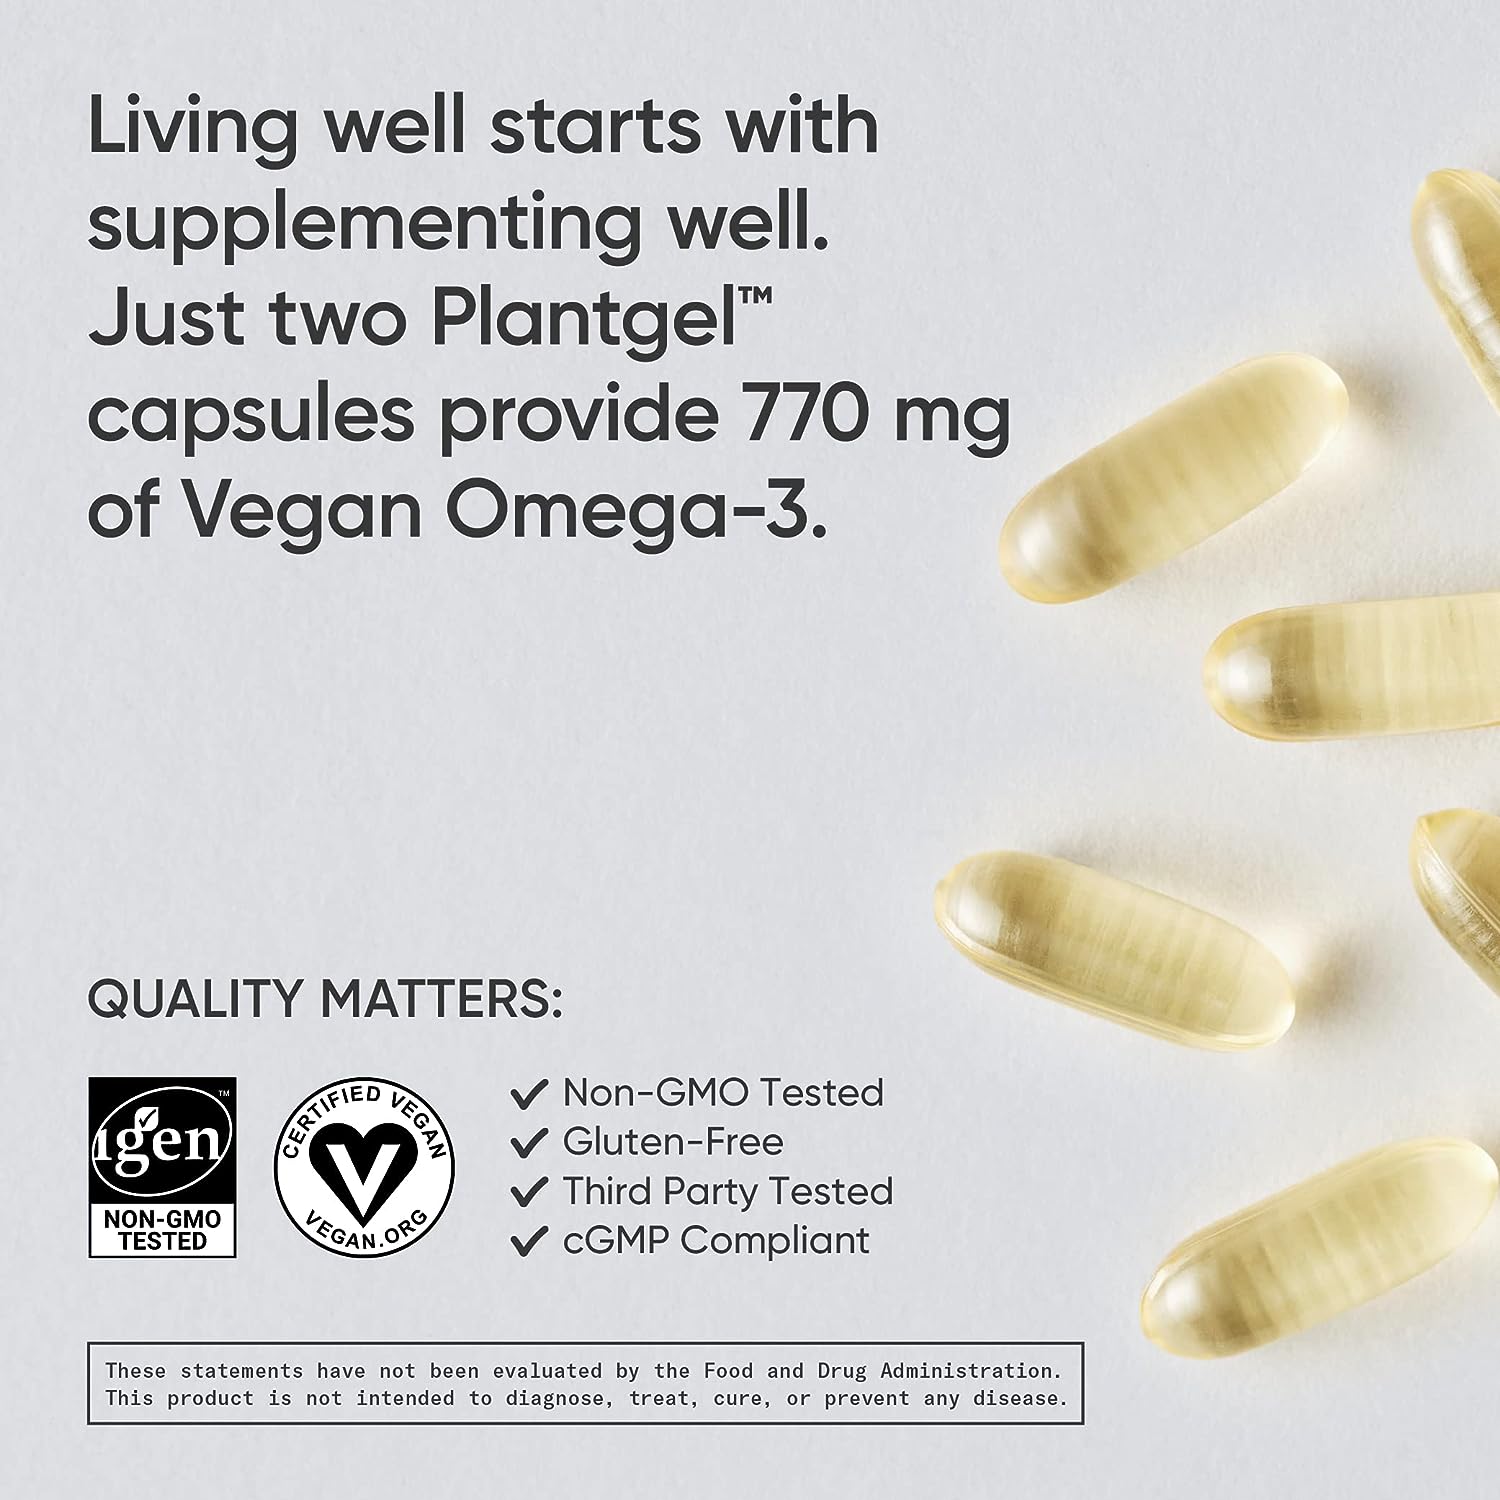 Sports Research Vegan Omega-3 from Algae Oil - Highest Levels of Vegan DHA & EPA Fatty Acids | Non-GMO Verified & Vegan Certified - 60 Veggie Softgels